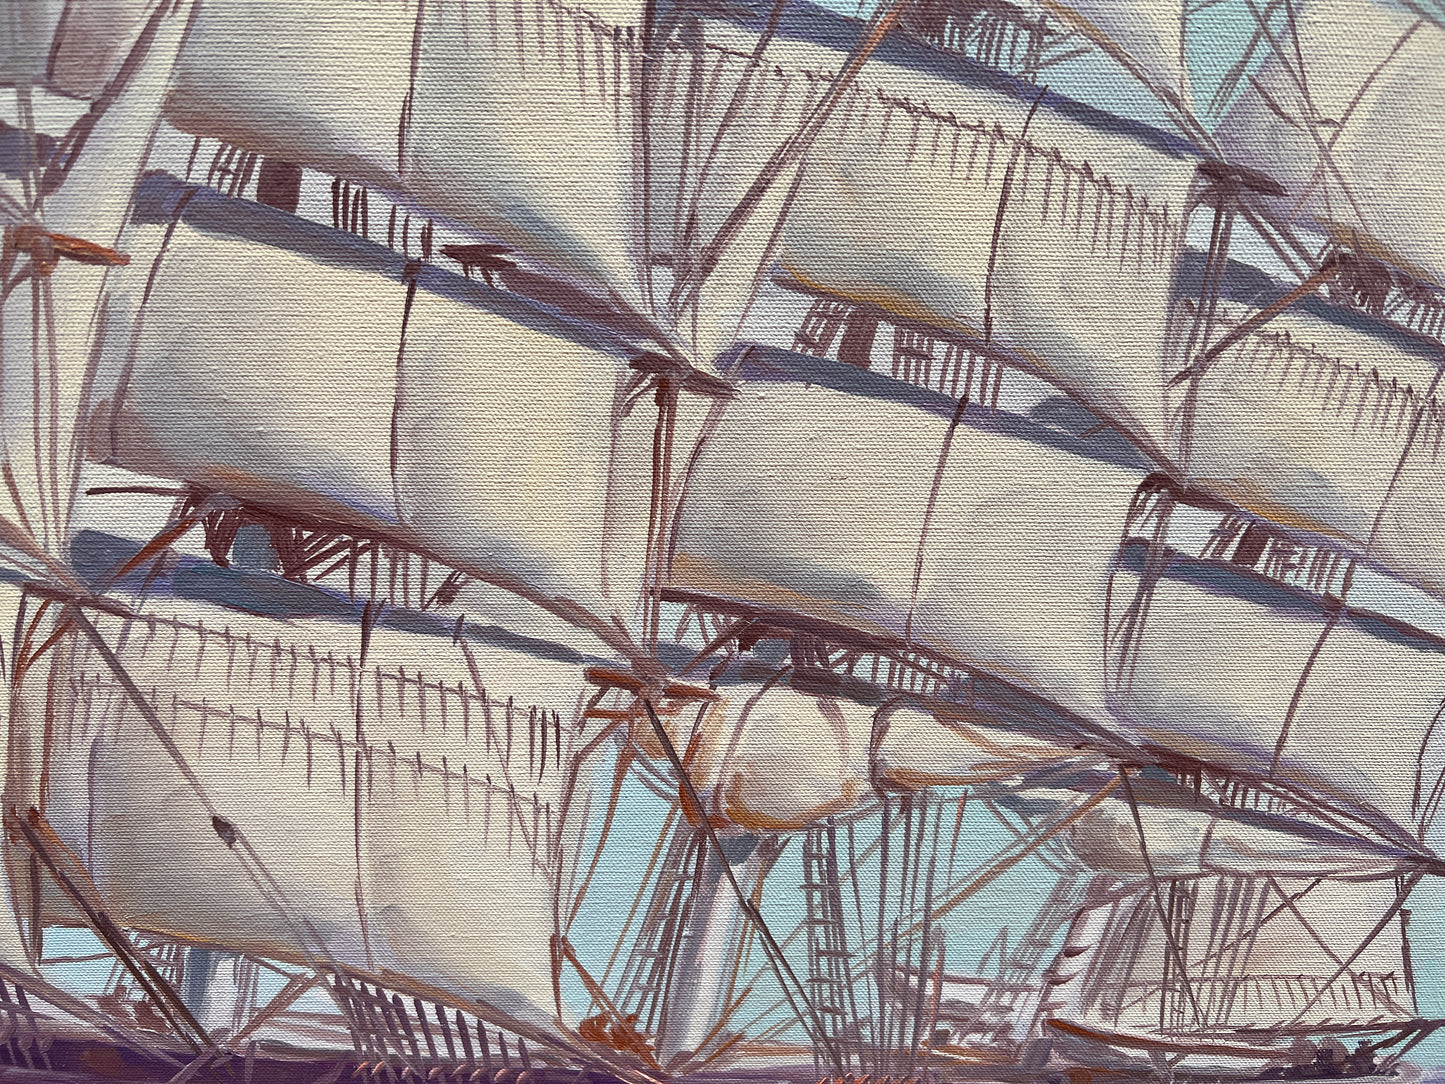 Humberto da Silva Fernandes(1937-2005)Clipper Ship Huge Oil Painting on Canvas